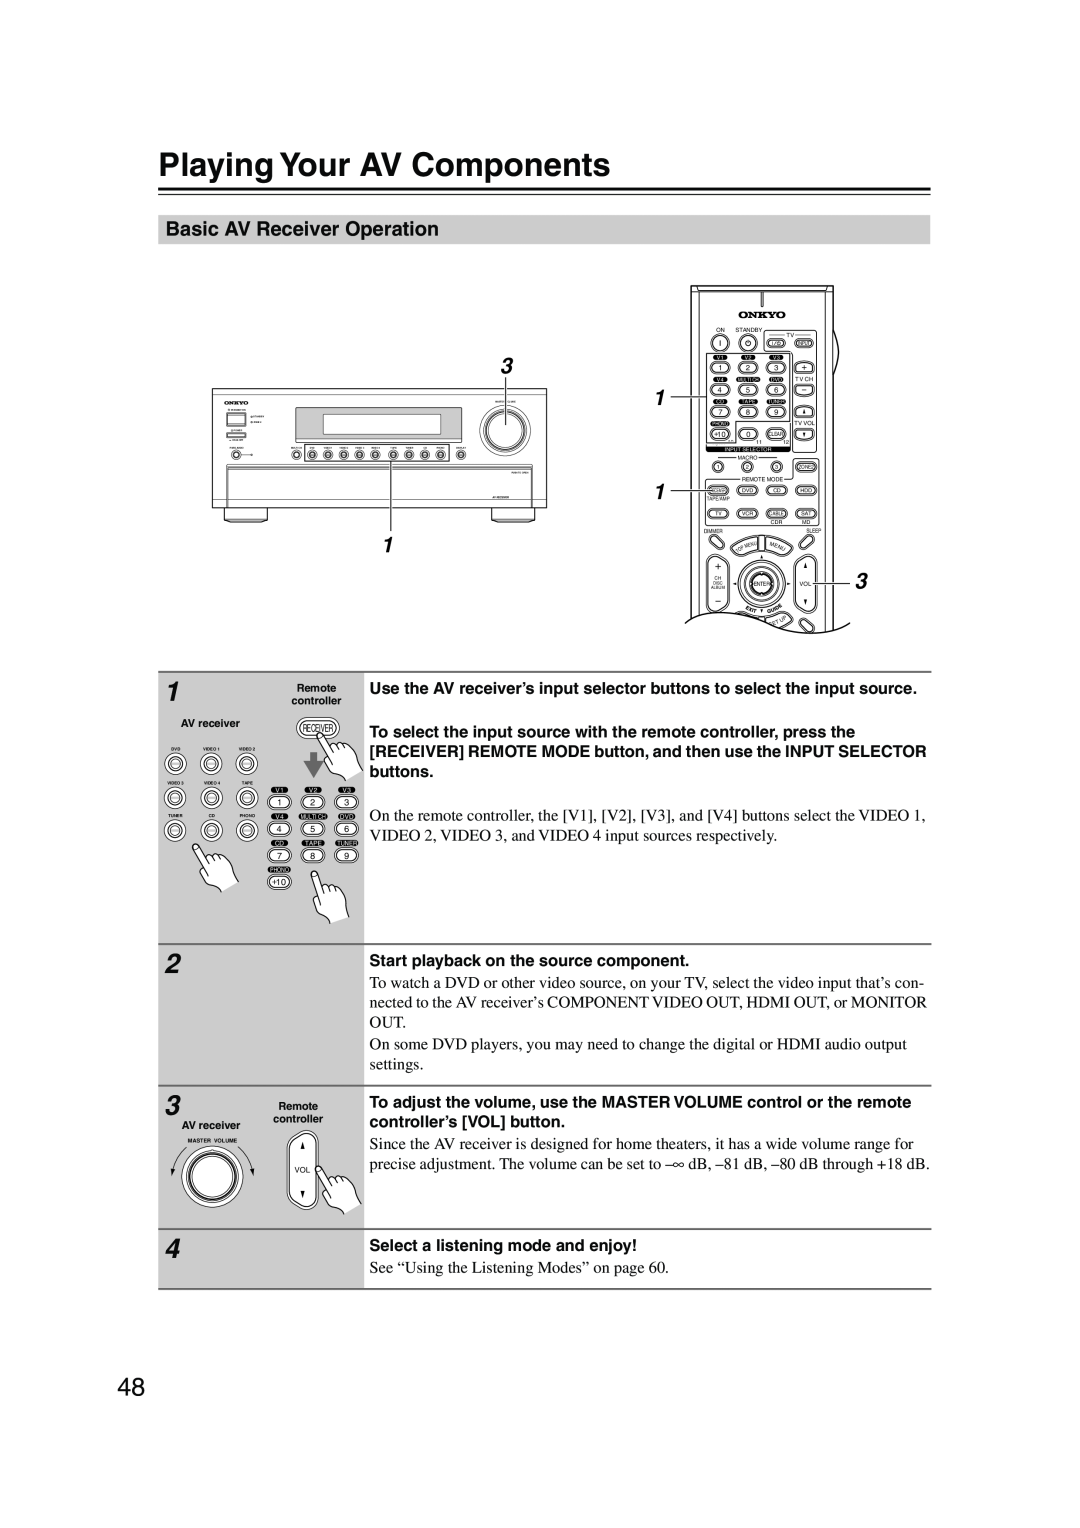 Onkyo SR804 instruction manual Playing Your AV Components, Basic AV Receiver Operation 